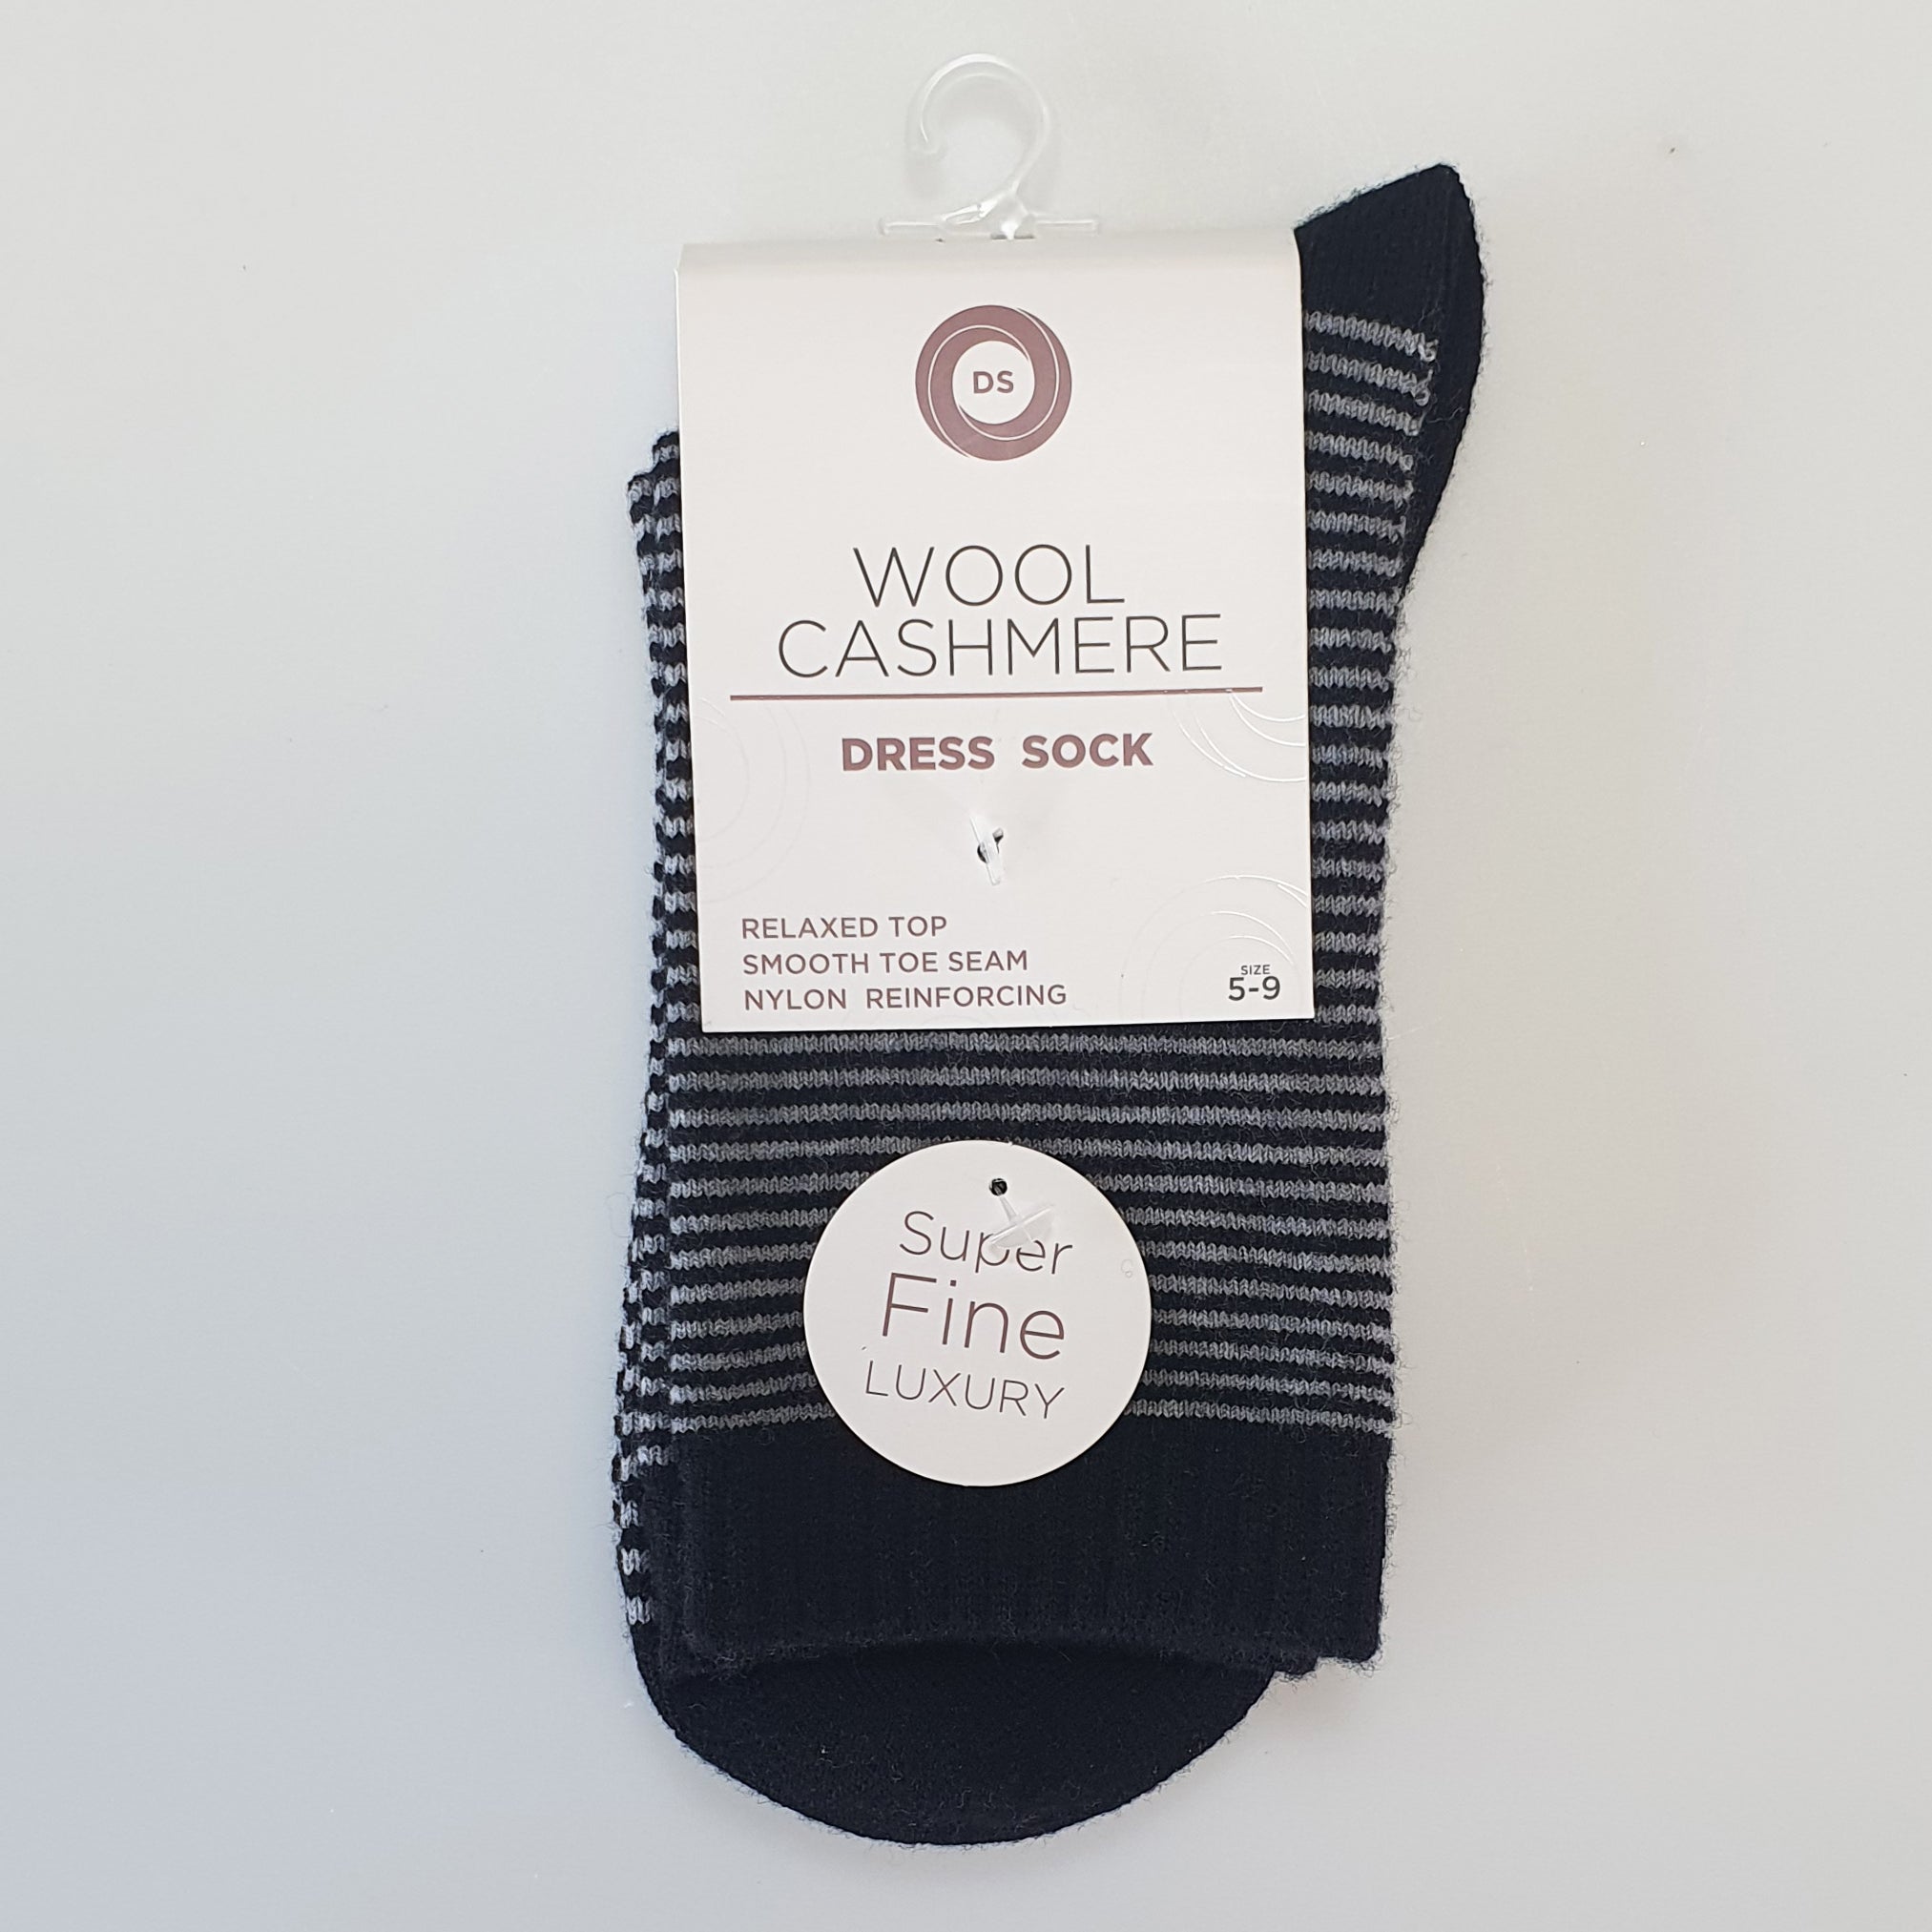 DS Wool Cashmere Dress Socks - Striped Black